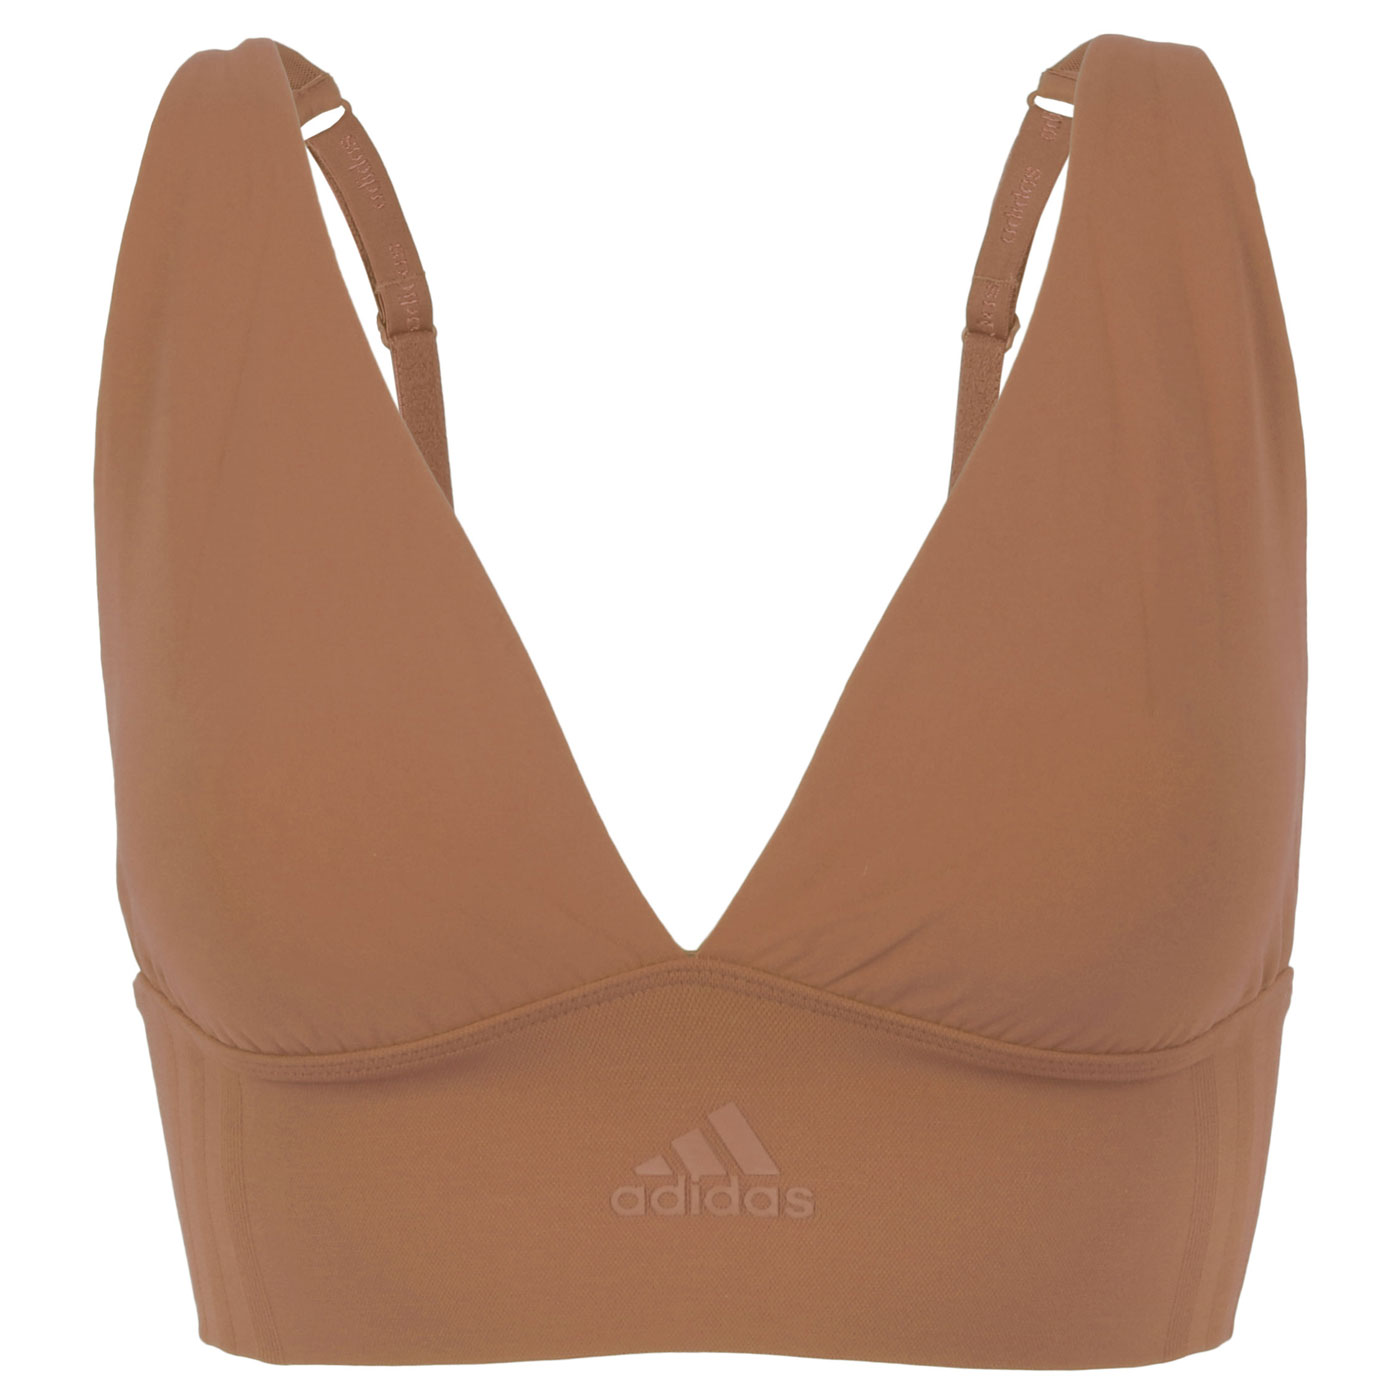 Picture of adidas Sports Underwear Longline Sport Bra Women - 301-toasted almond